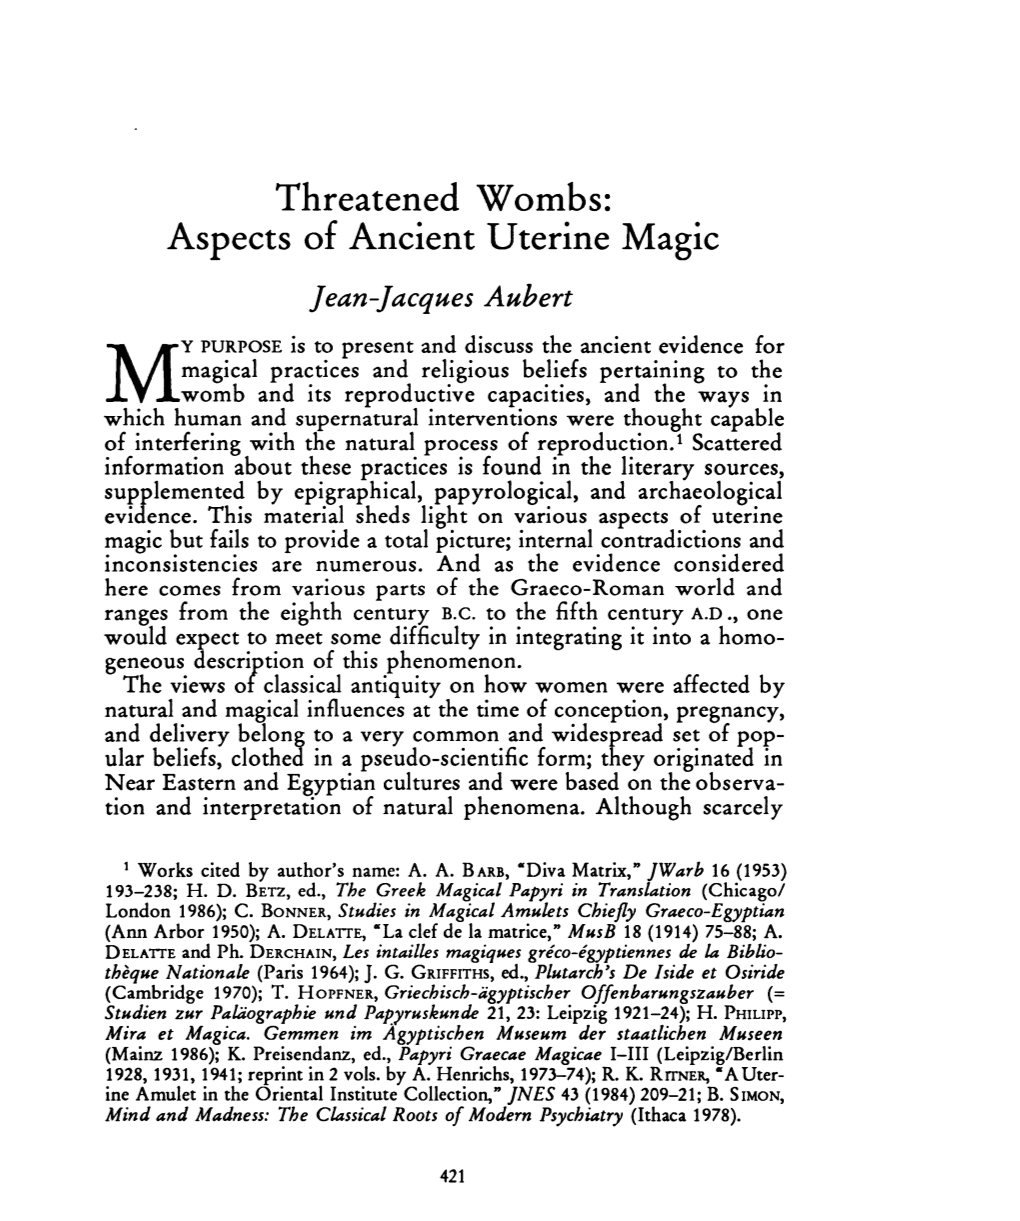 Aspects of Ancient Uterine Magic , Greek, Roman and Byzantine Studies, 30:3 (1989) P.421